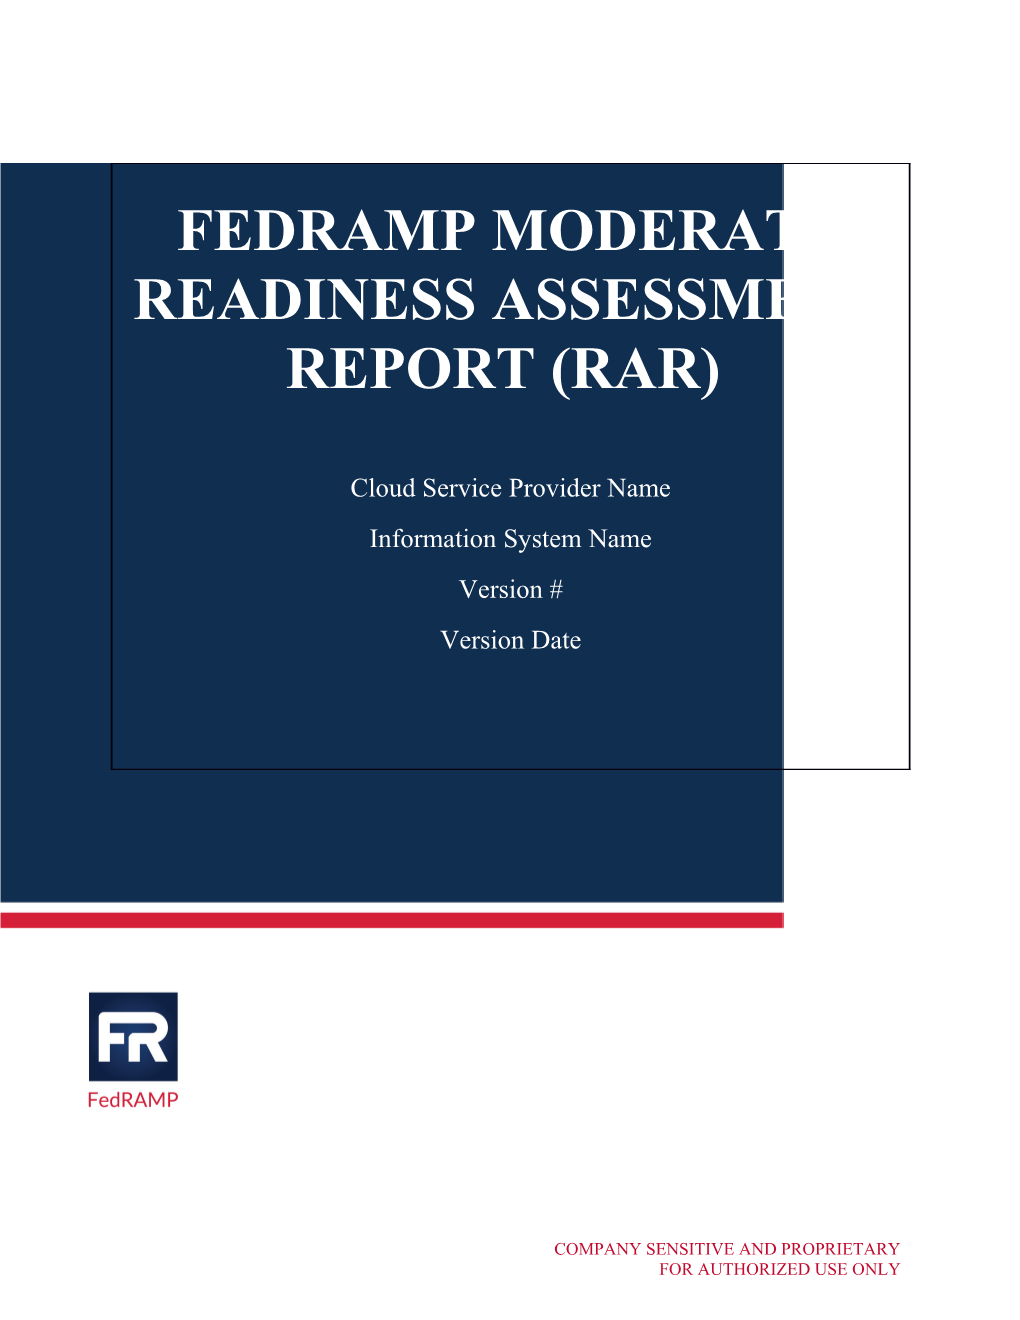 Fedramp Moderate Readiness Assessment Report (RAR)